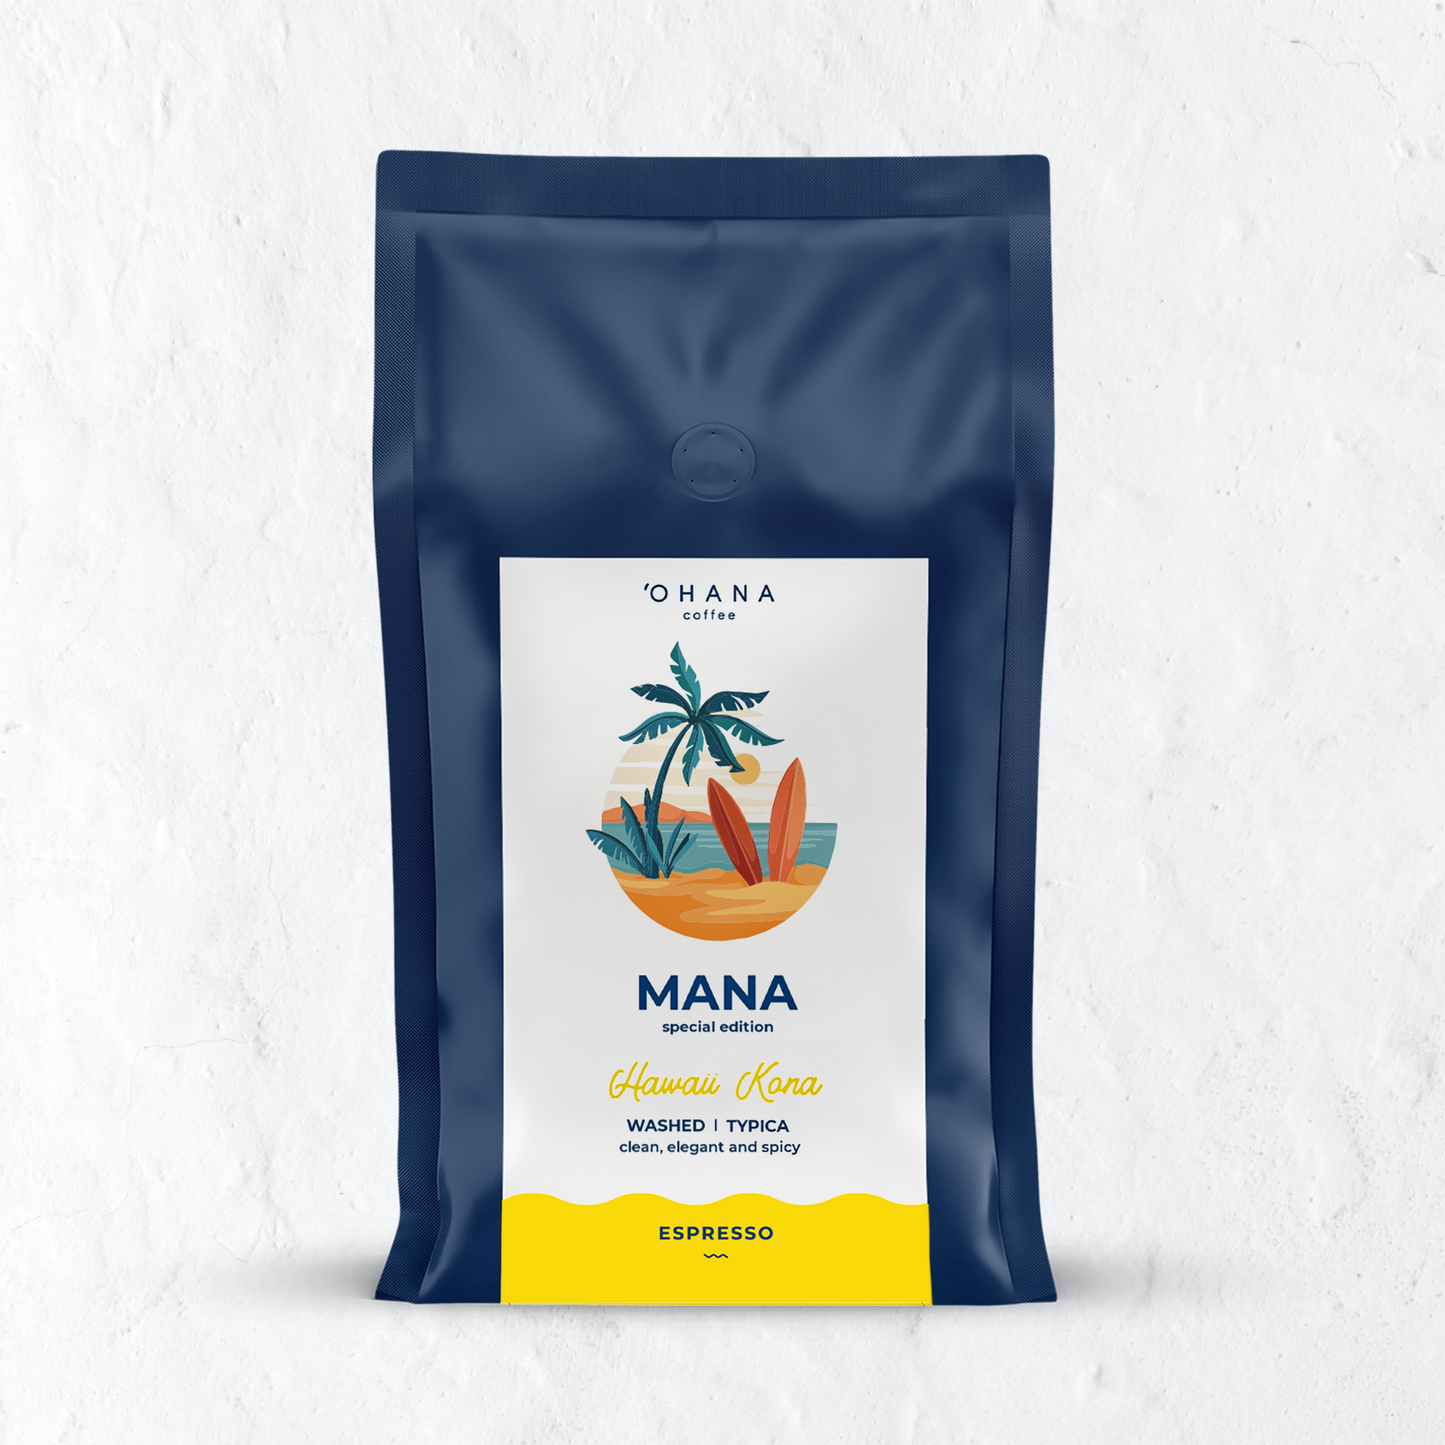 Mana - Kona, Hawaii - Limited edition